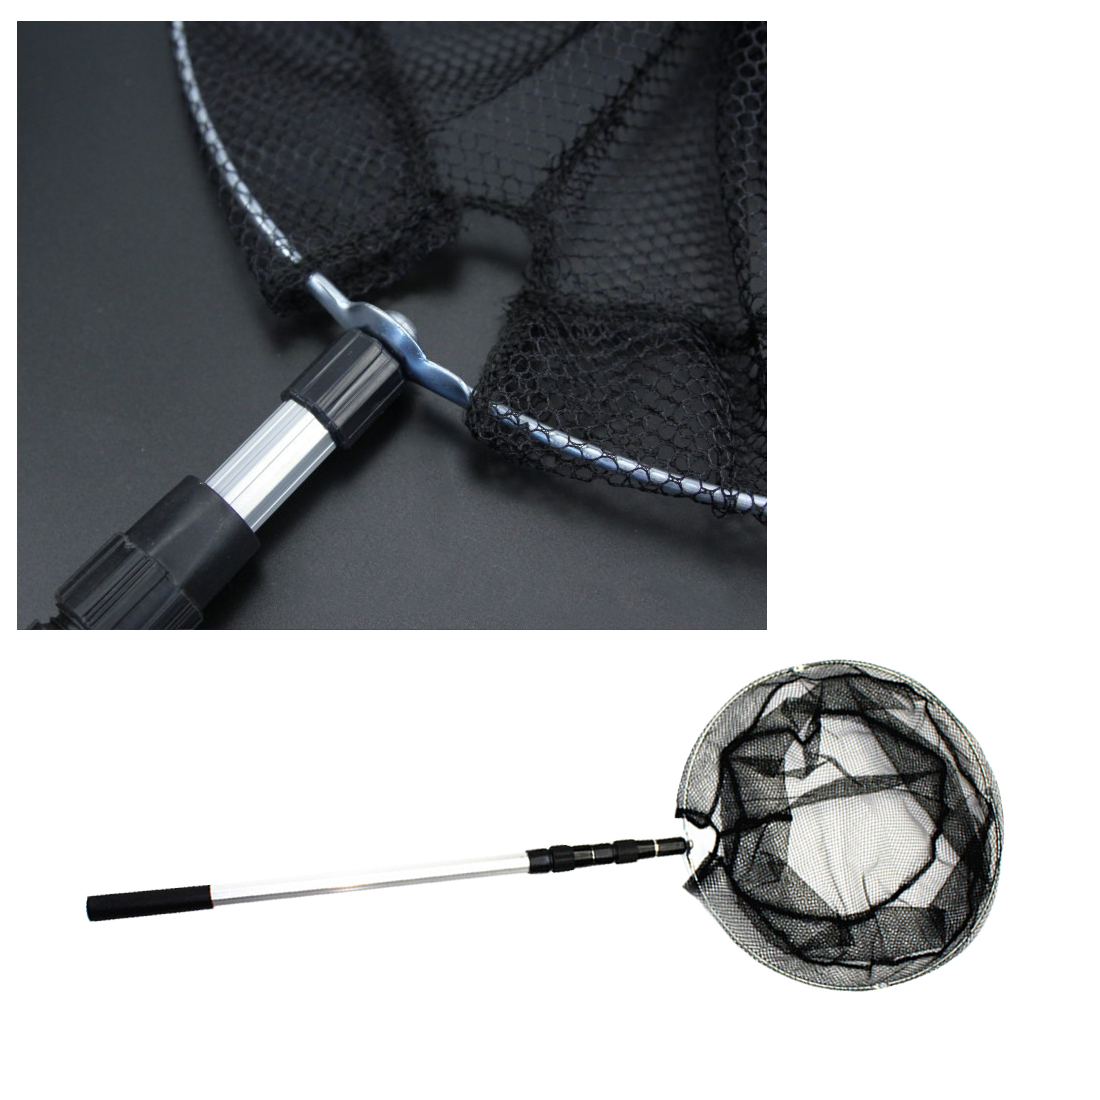 Aluminum 3 Section 1.5M Fly Fishing Landing Net Telescopic Hand Fish Net Extending Pole Handle Fishing Tackle Equipment